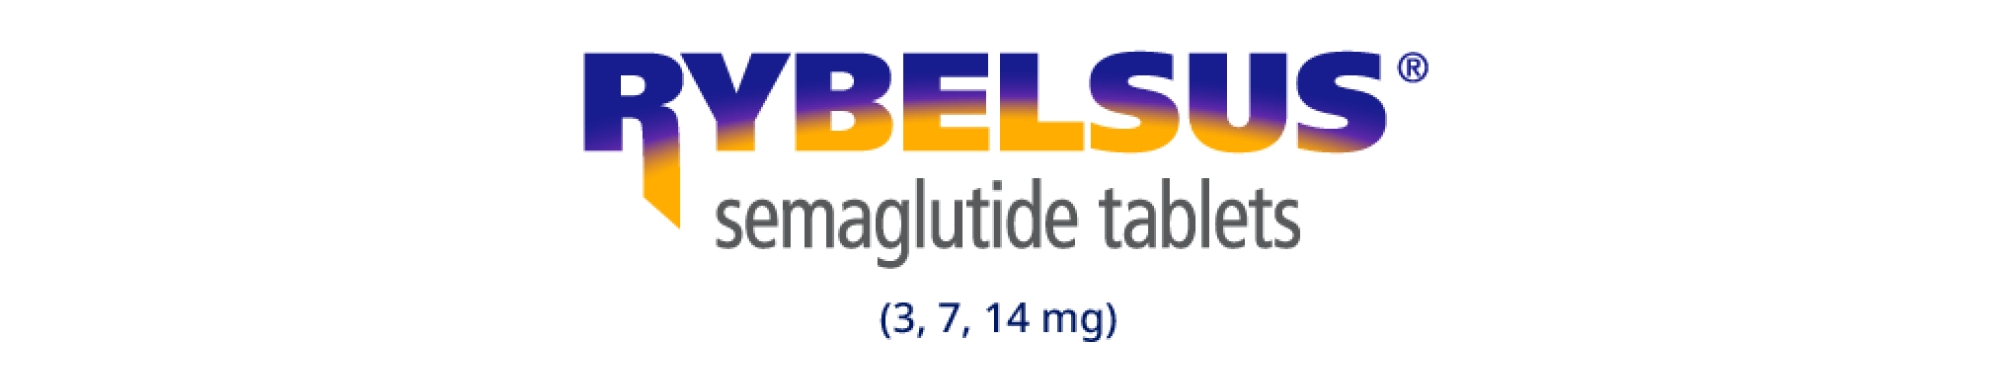 Rybelsus logo